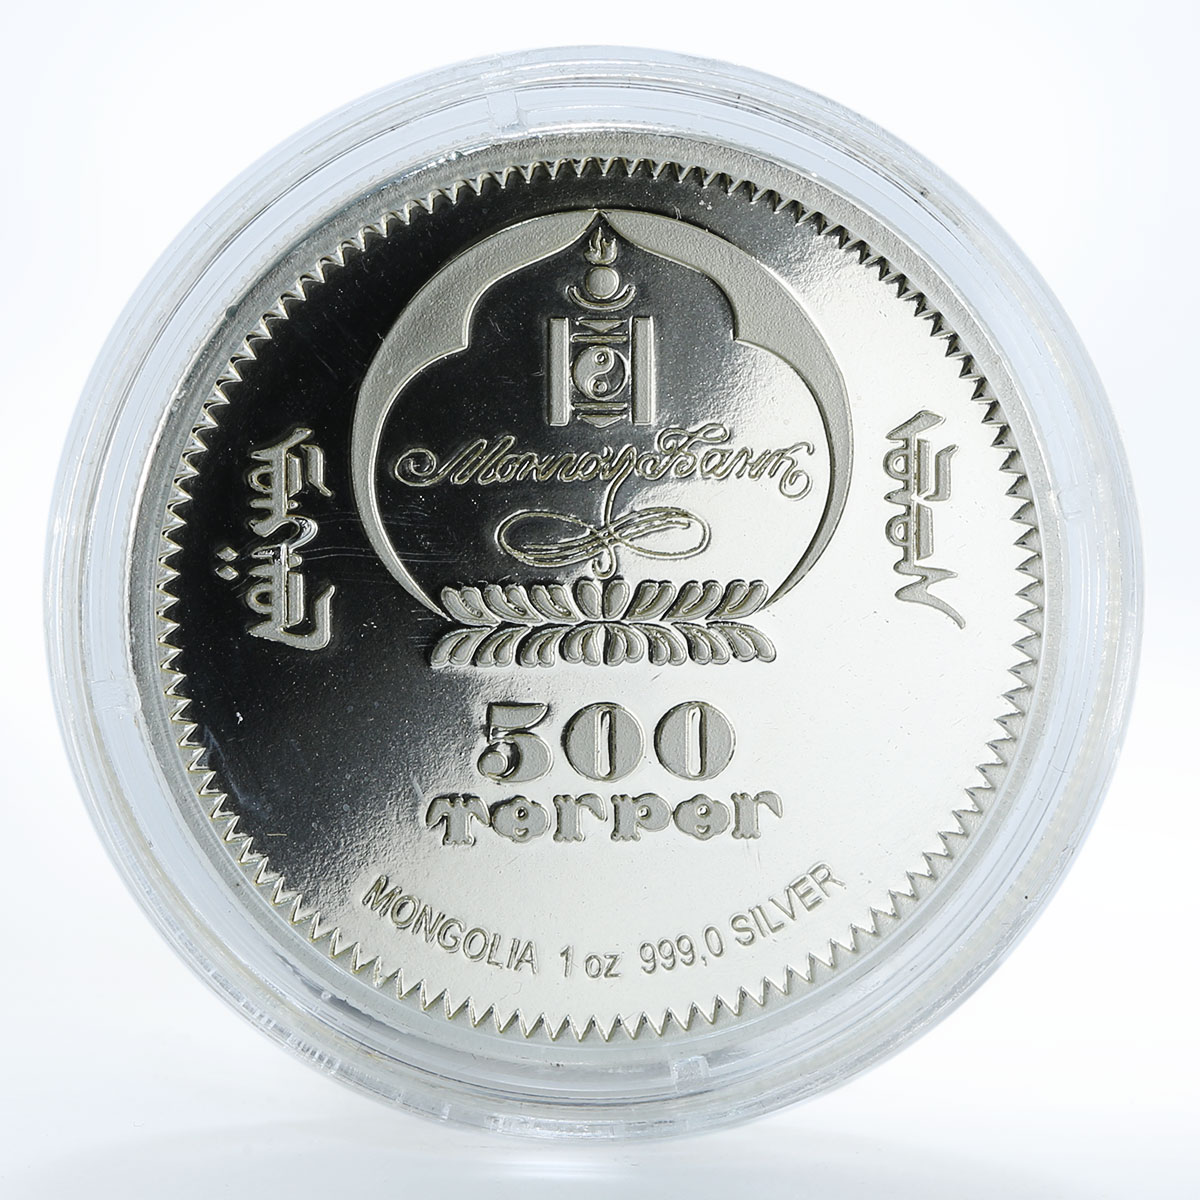 Mongolia 500 tugriks Japanese Sumo Wrestling Tanikaze №3 silver coin 2005